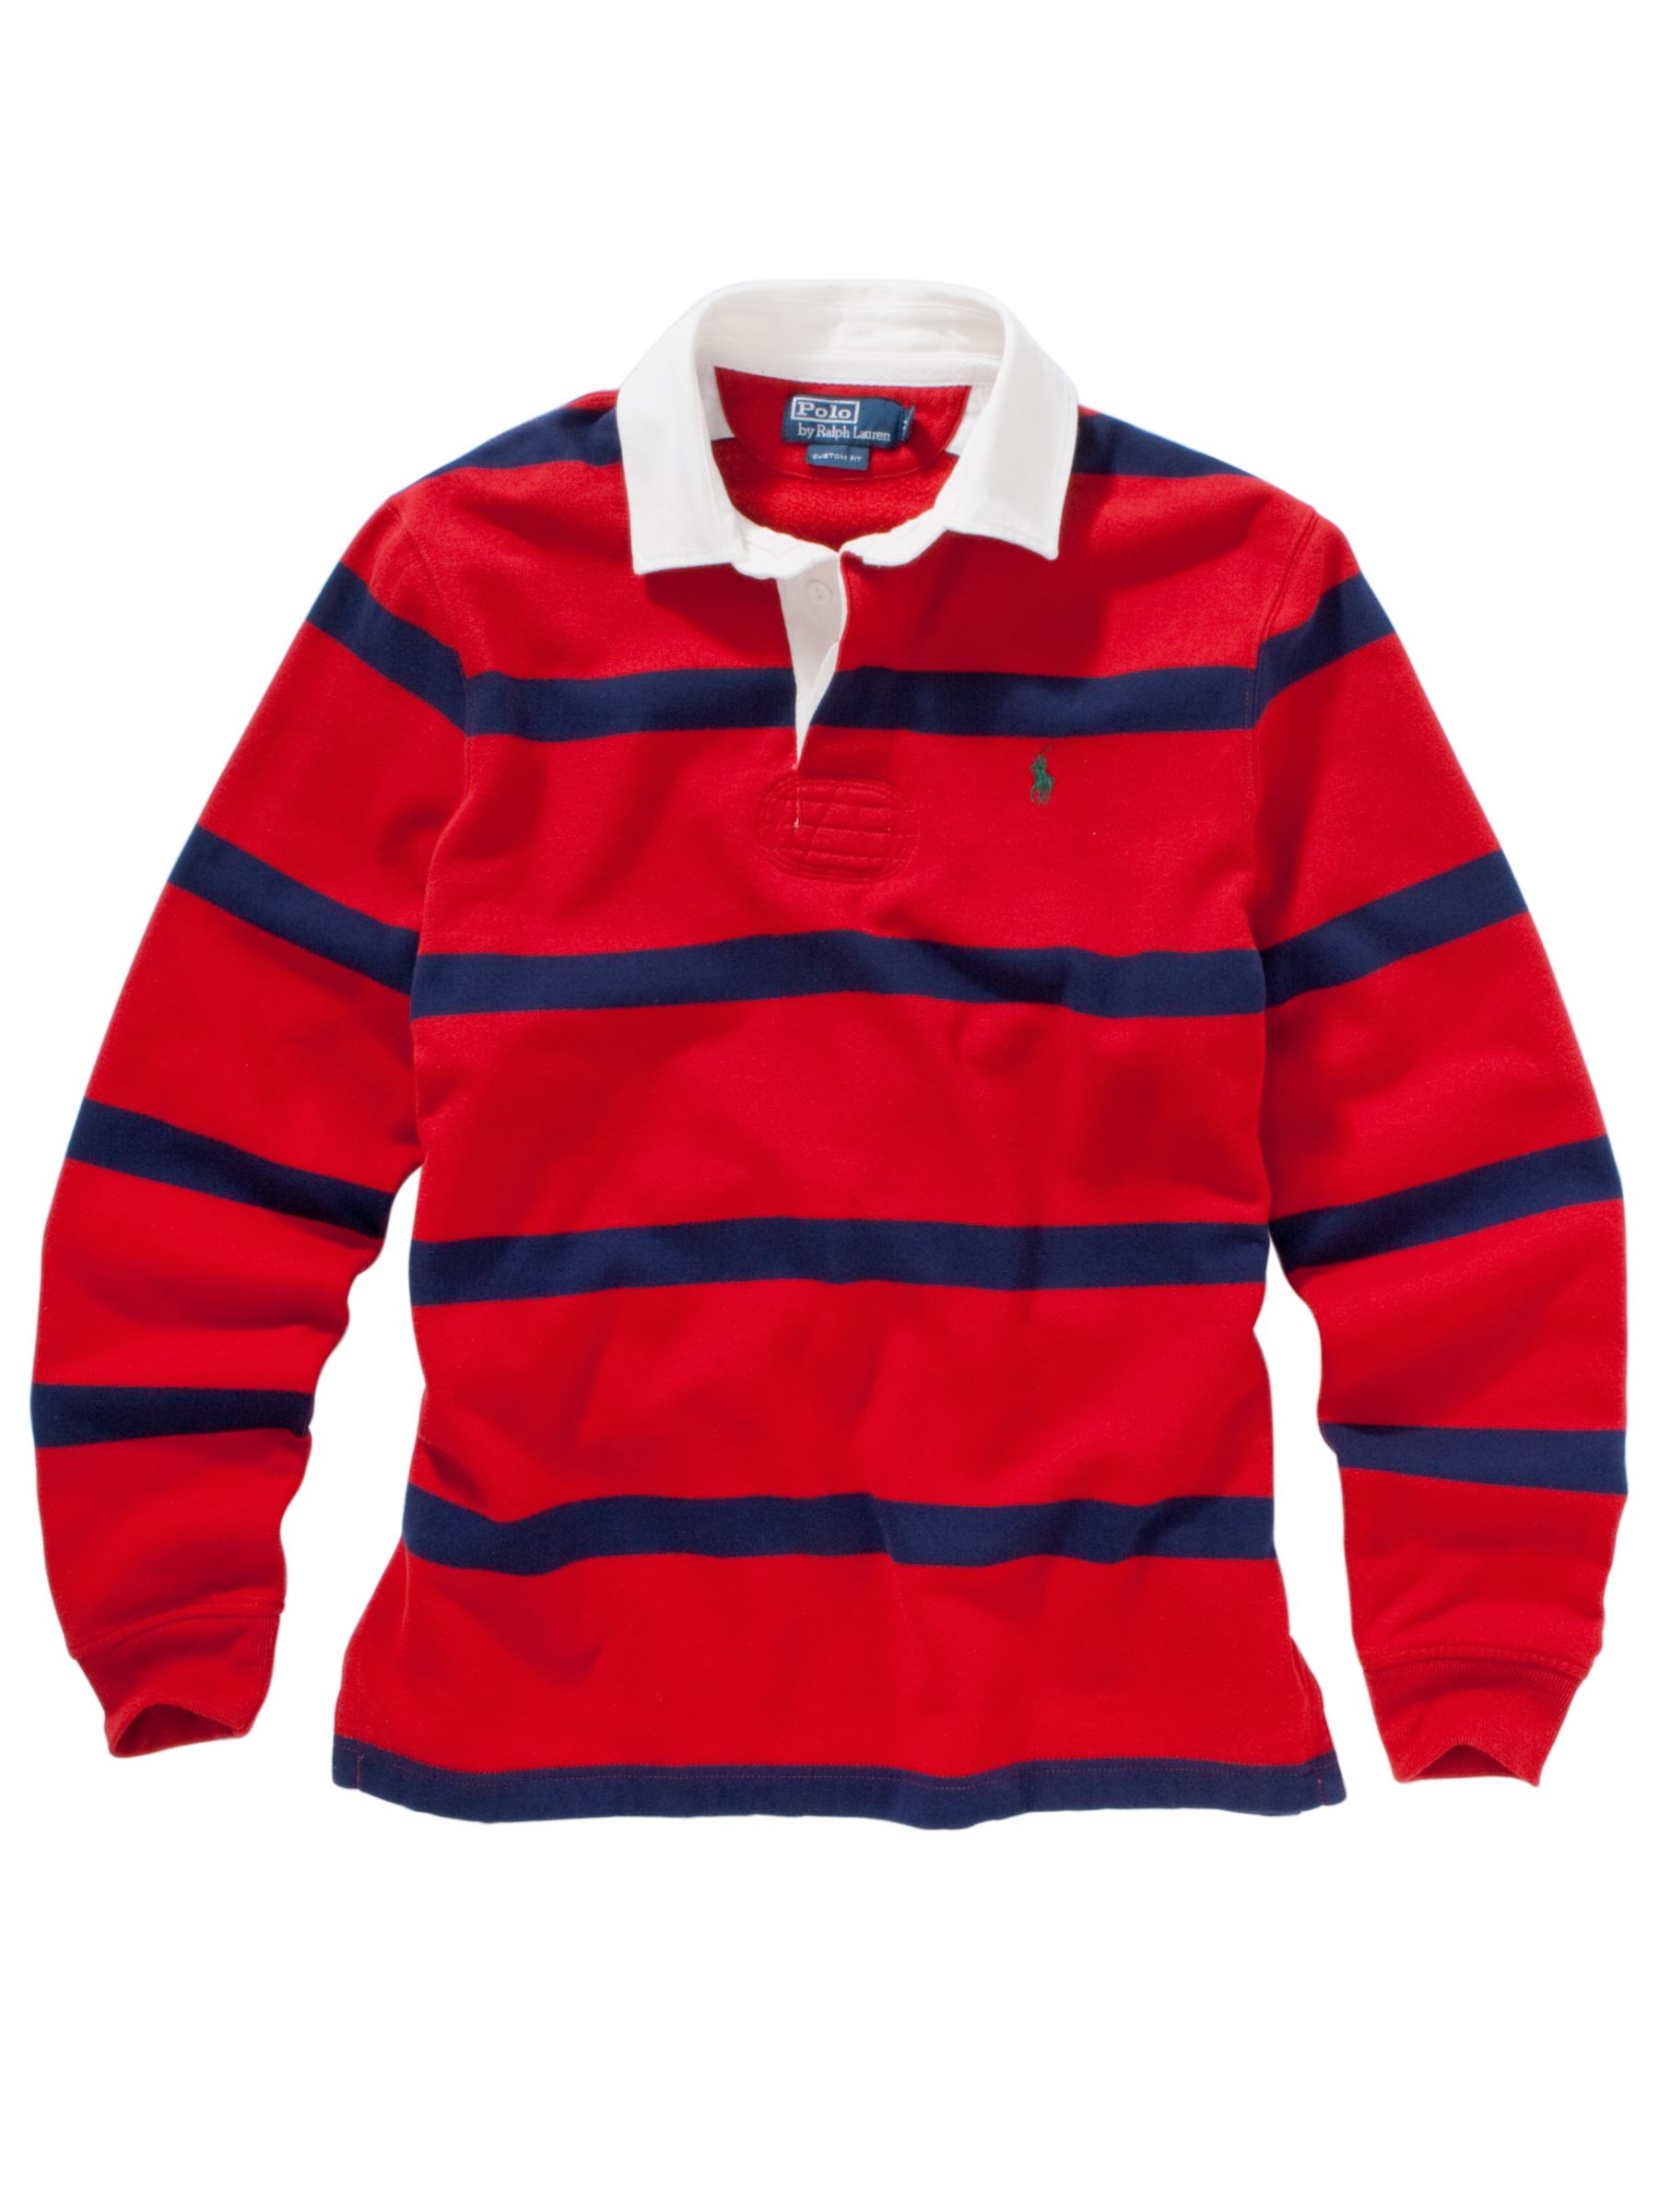 Ralph Lauren Polo Ralph Lauren Stripe Rugby Shirt, Red/navy